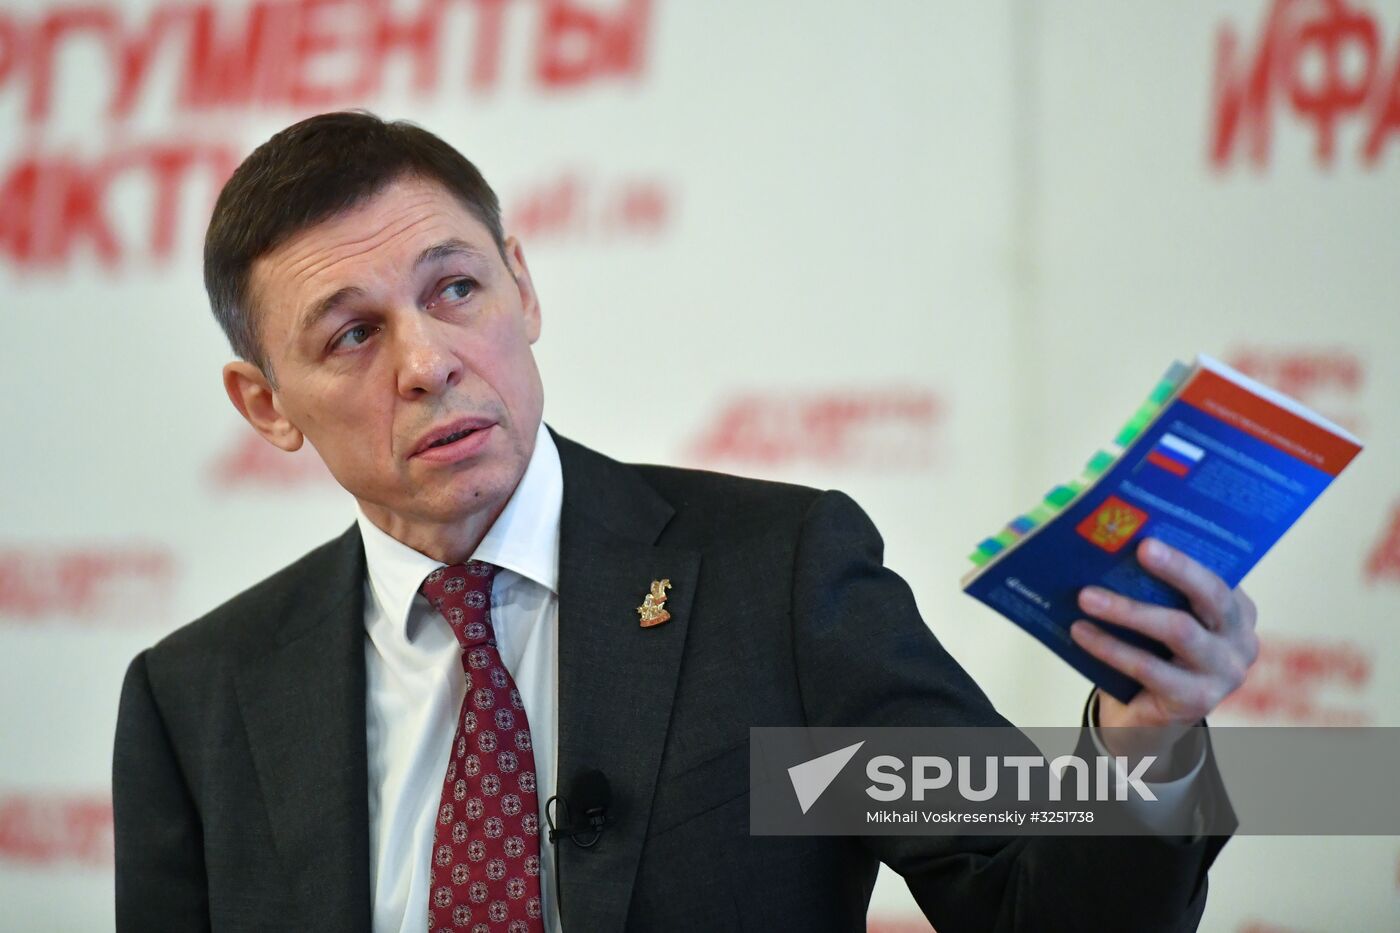 News conference by Vladimir Mikhailov